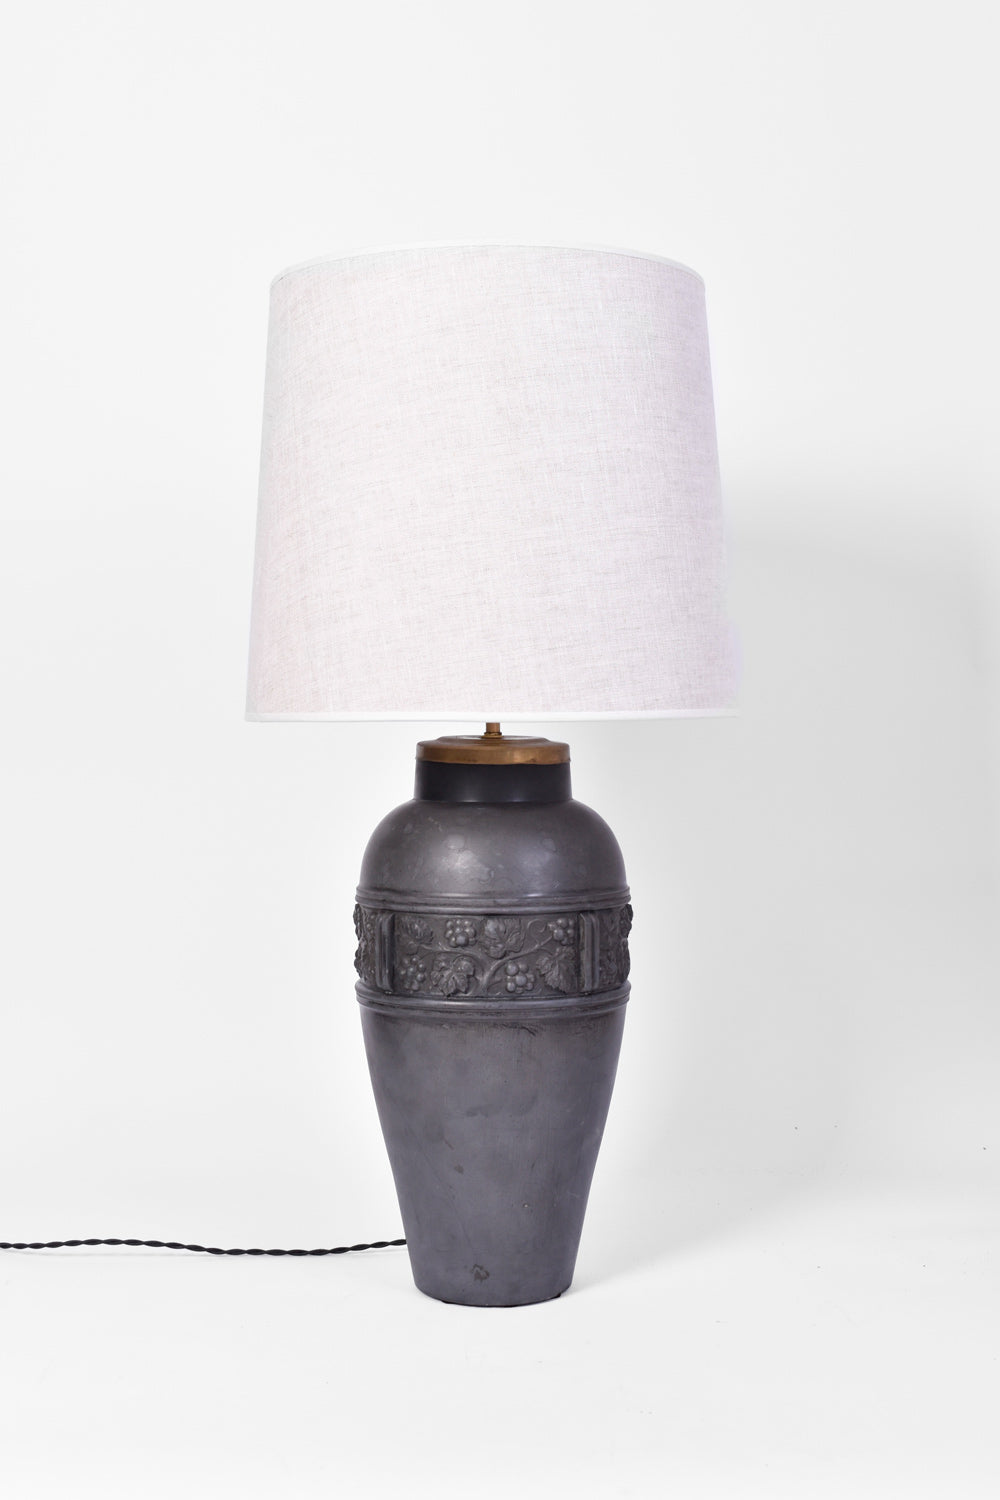 Black ceramic vegetal pattern lamp, 1930s.